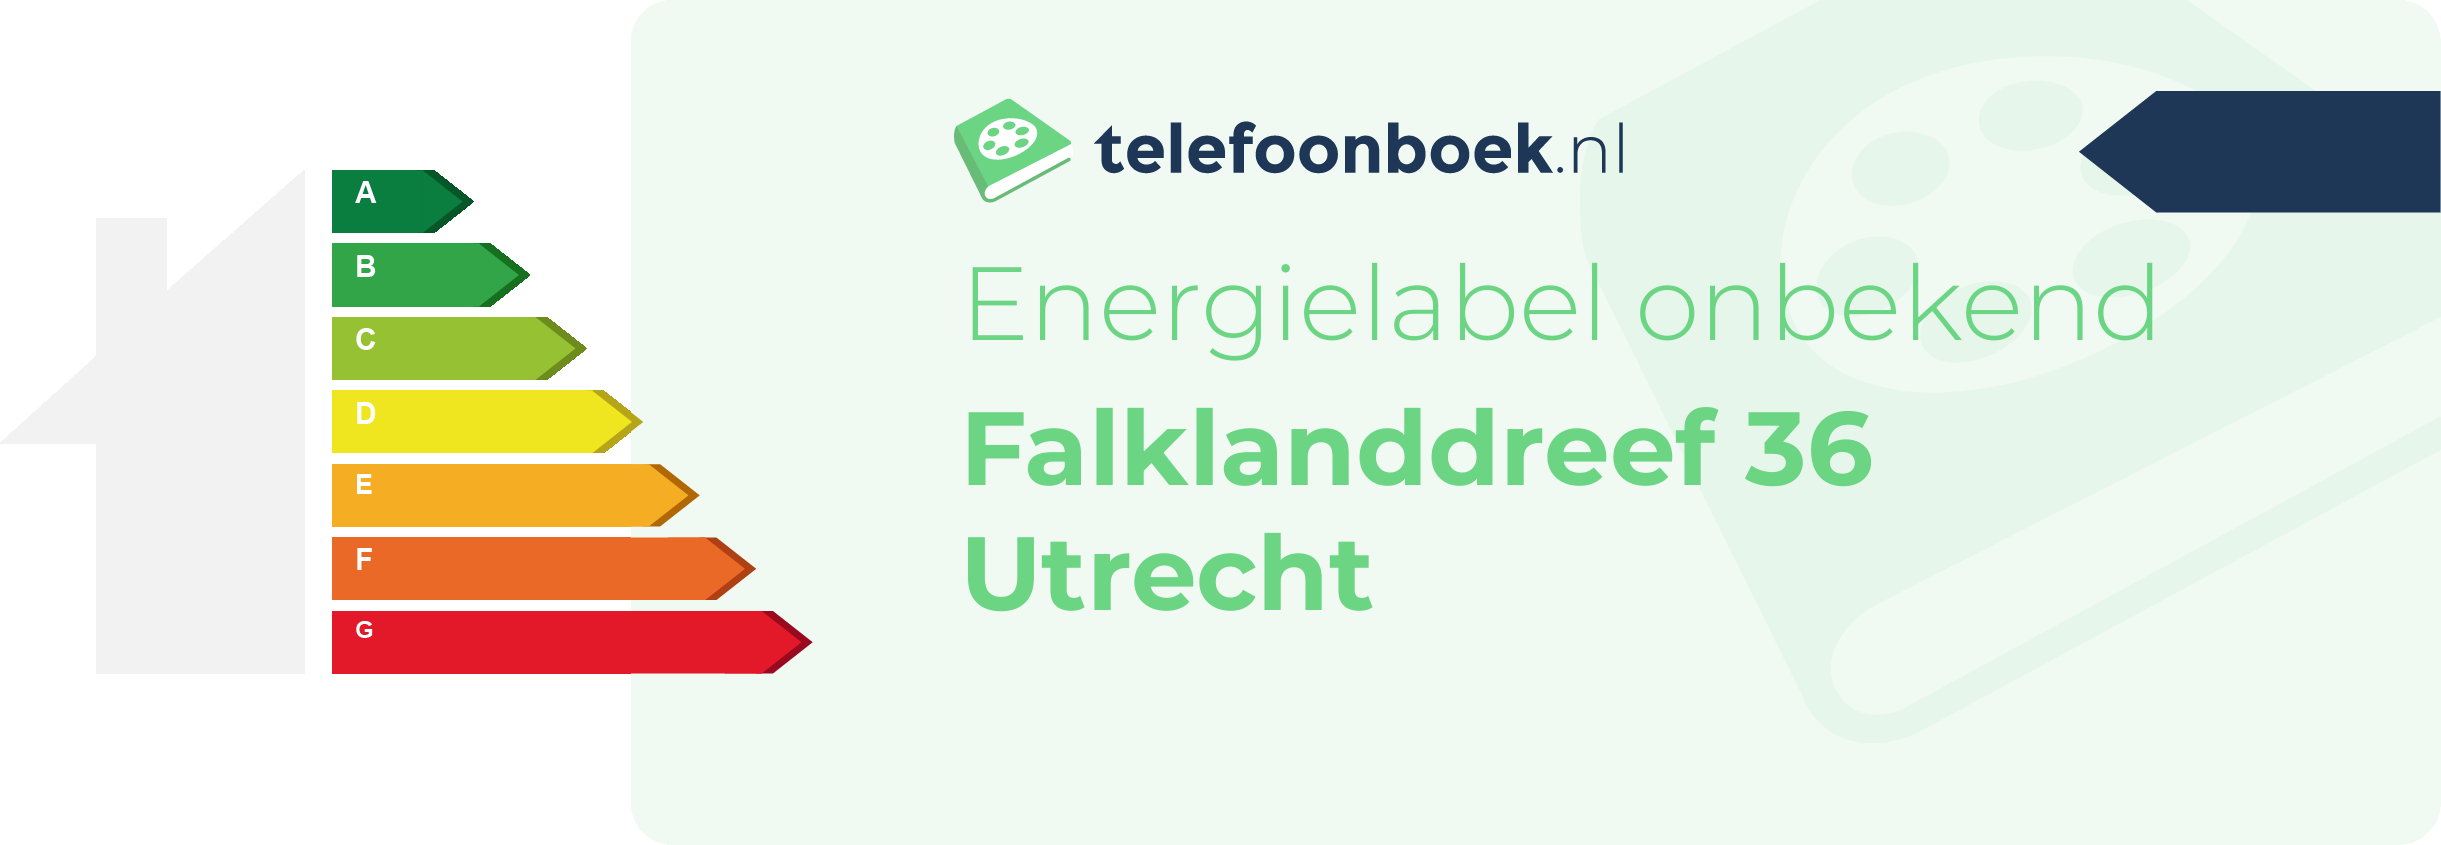 Energielabel Falklanddreef 36 Utrecht